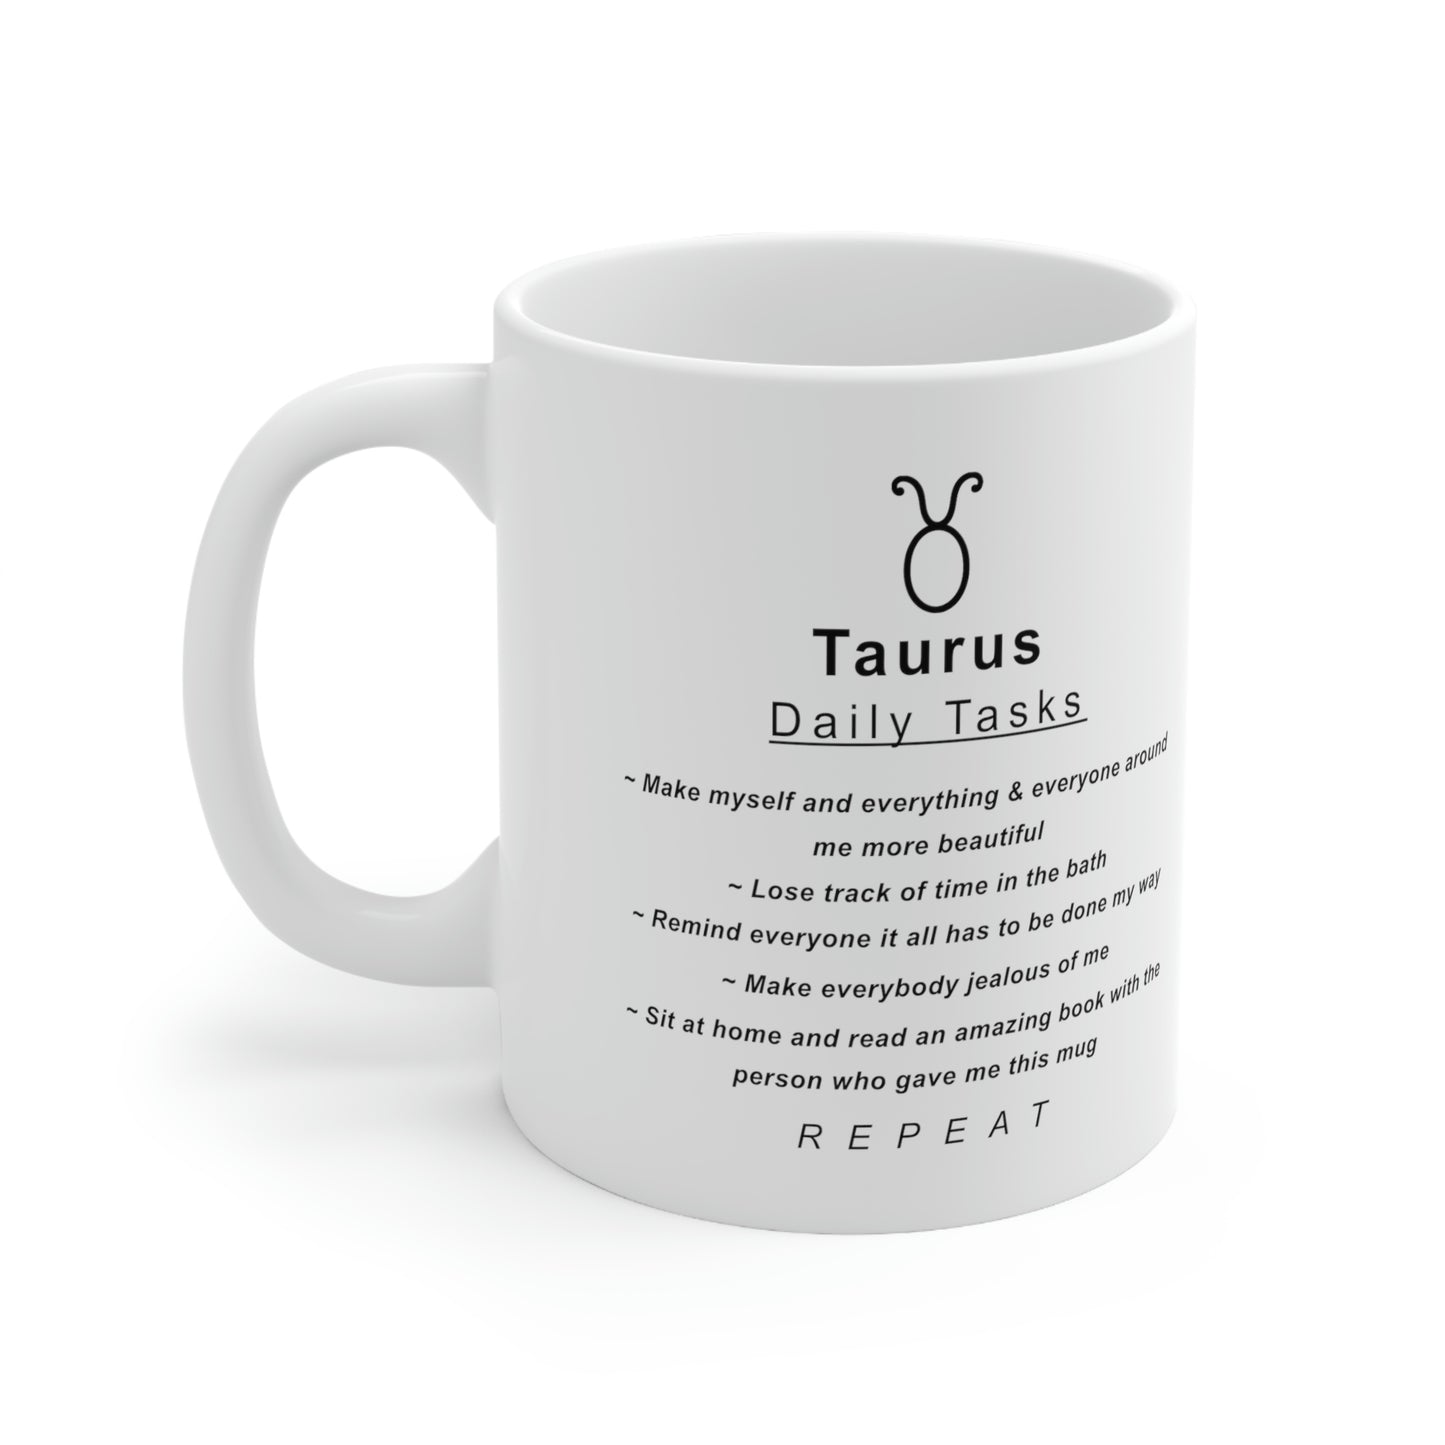 Taurus Mug: "Taurus Daily Tasks" - full text in description